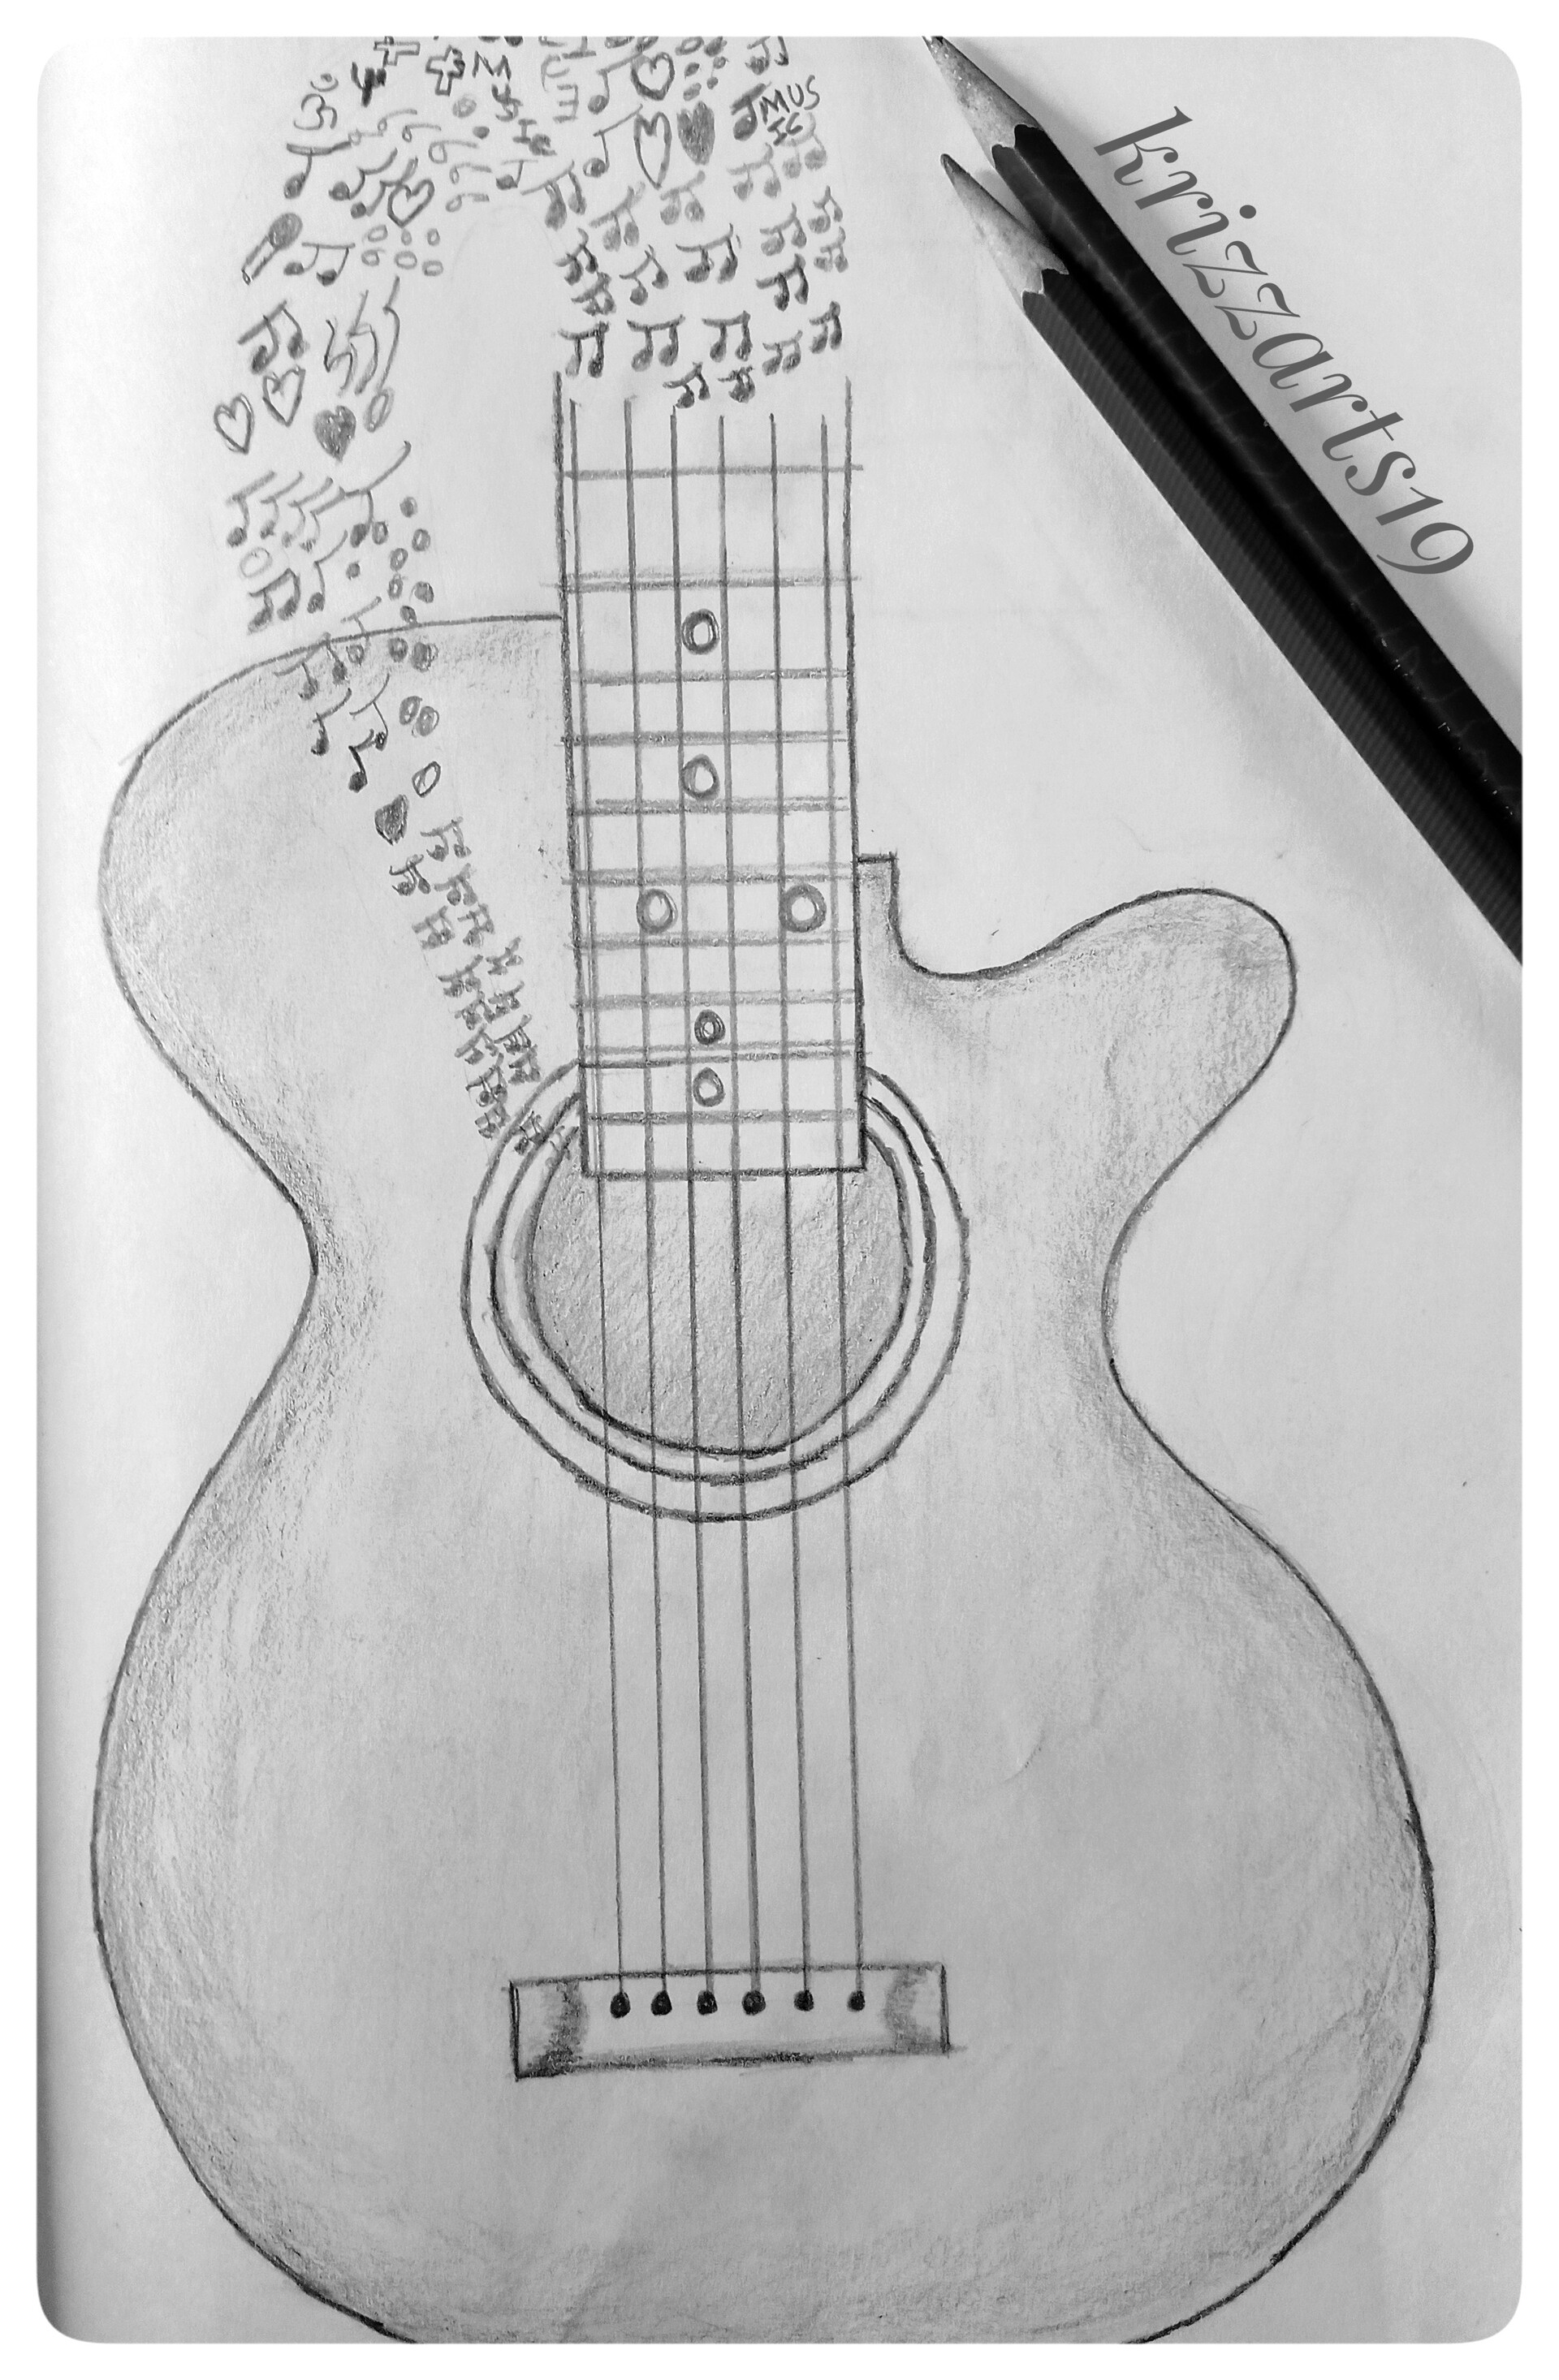 Guitar Pencil Drawing 2 by craigaskew on DeviantArt